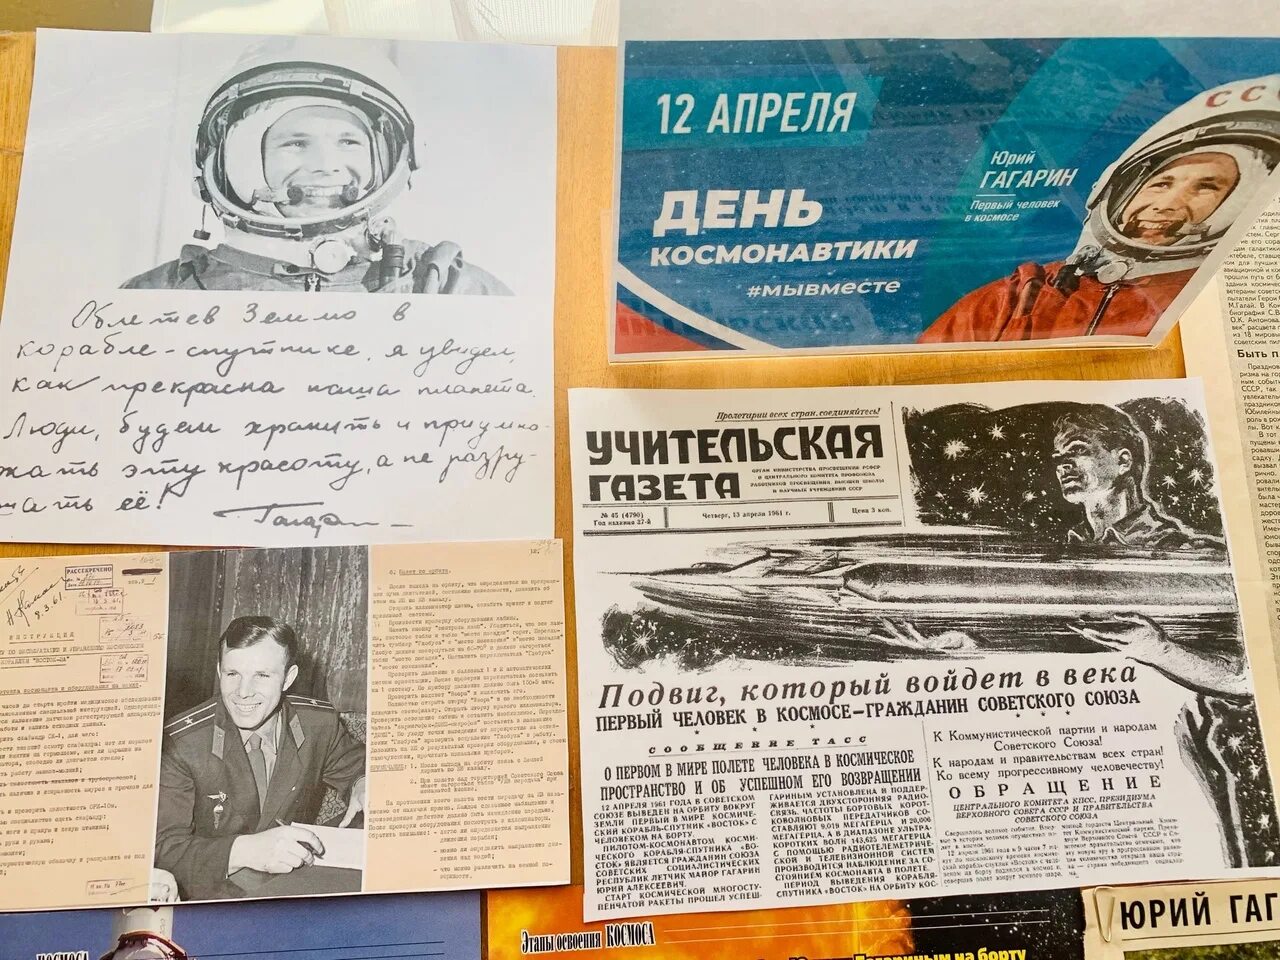 12 апреля 1961 день недели. 12 Апреля 1961 года. 12 Апреля 1961 года день космонавтики. 12 Апреля день космонавтики Гагарин.